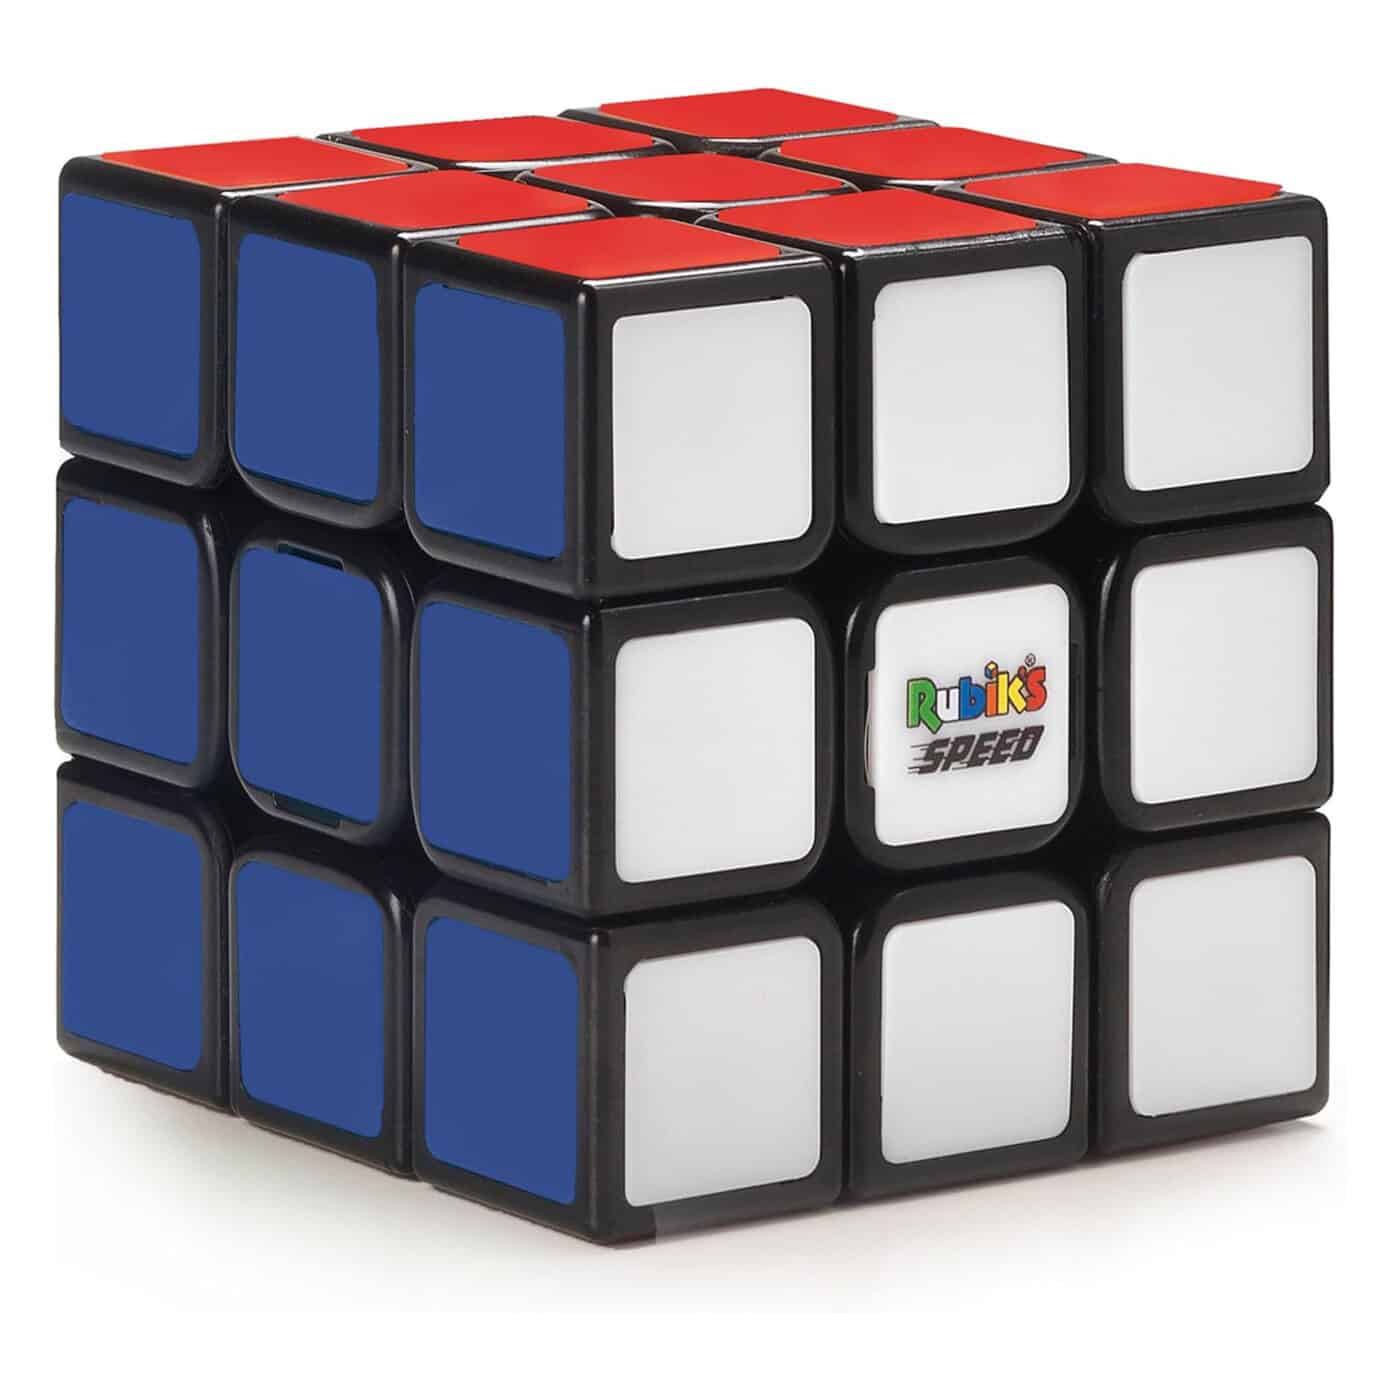 Rubik's Speed Cube1